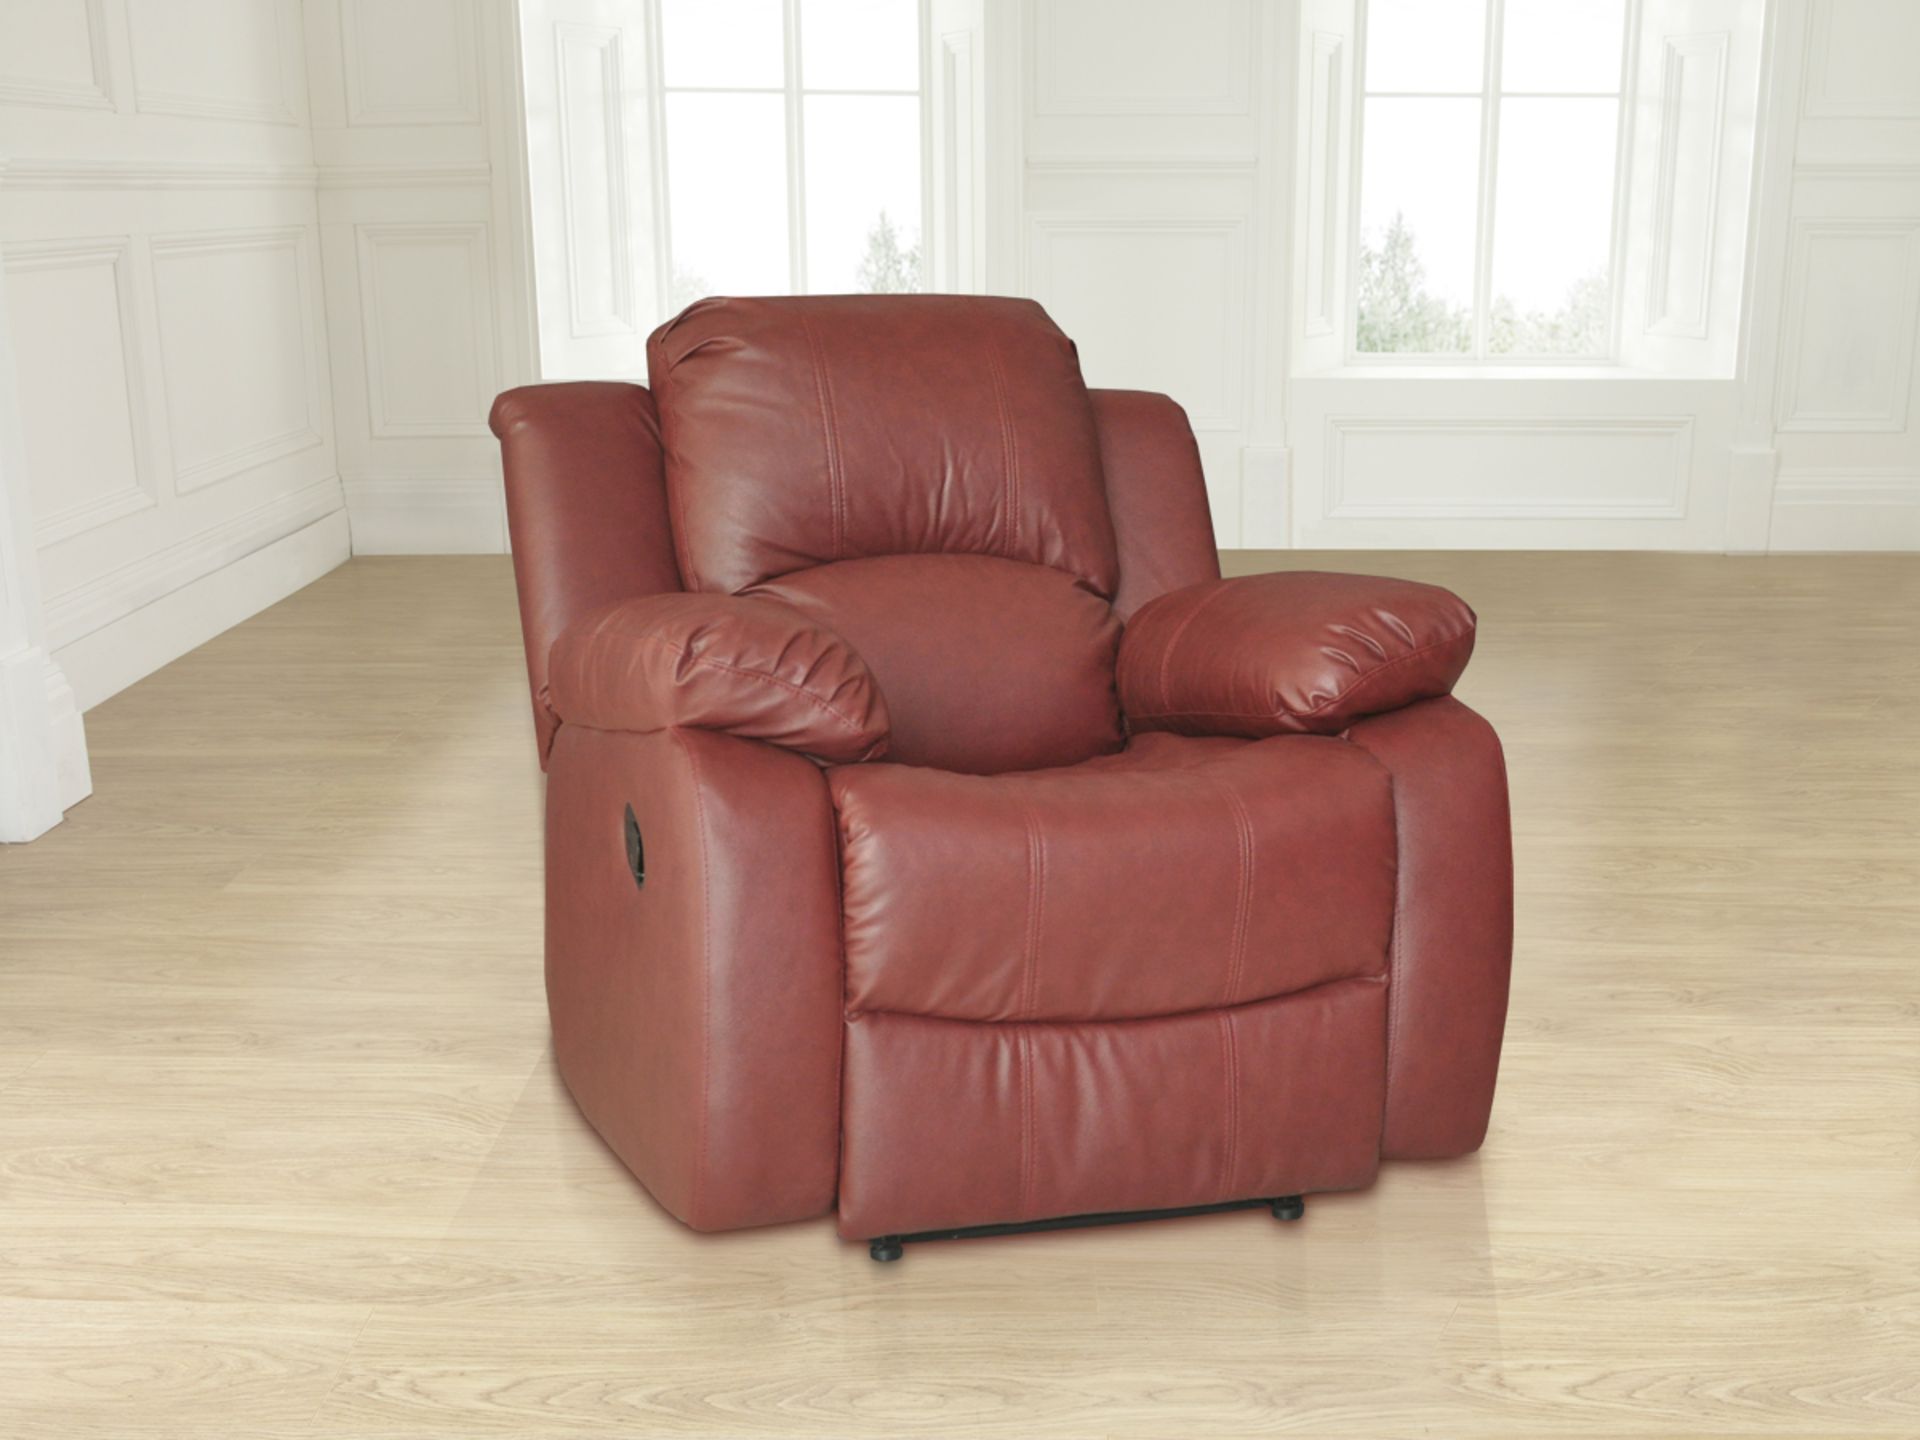 Supreme Valance burgandy leather 2 seater reclining sofa - Image 3 of 3